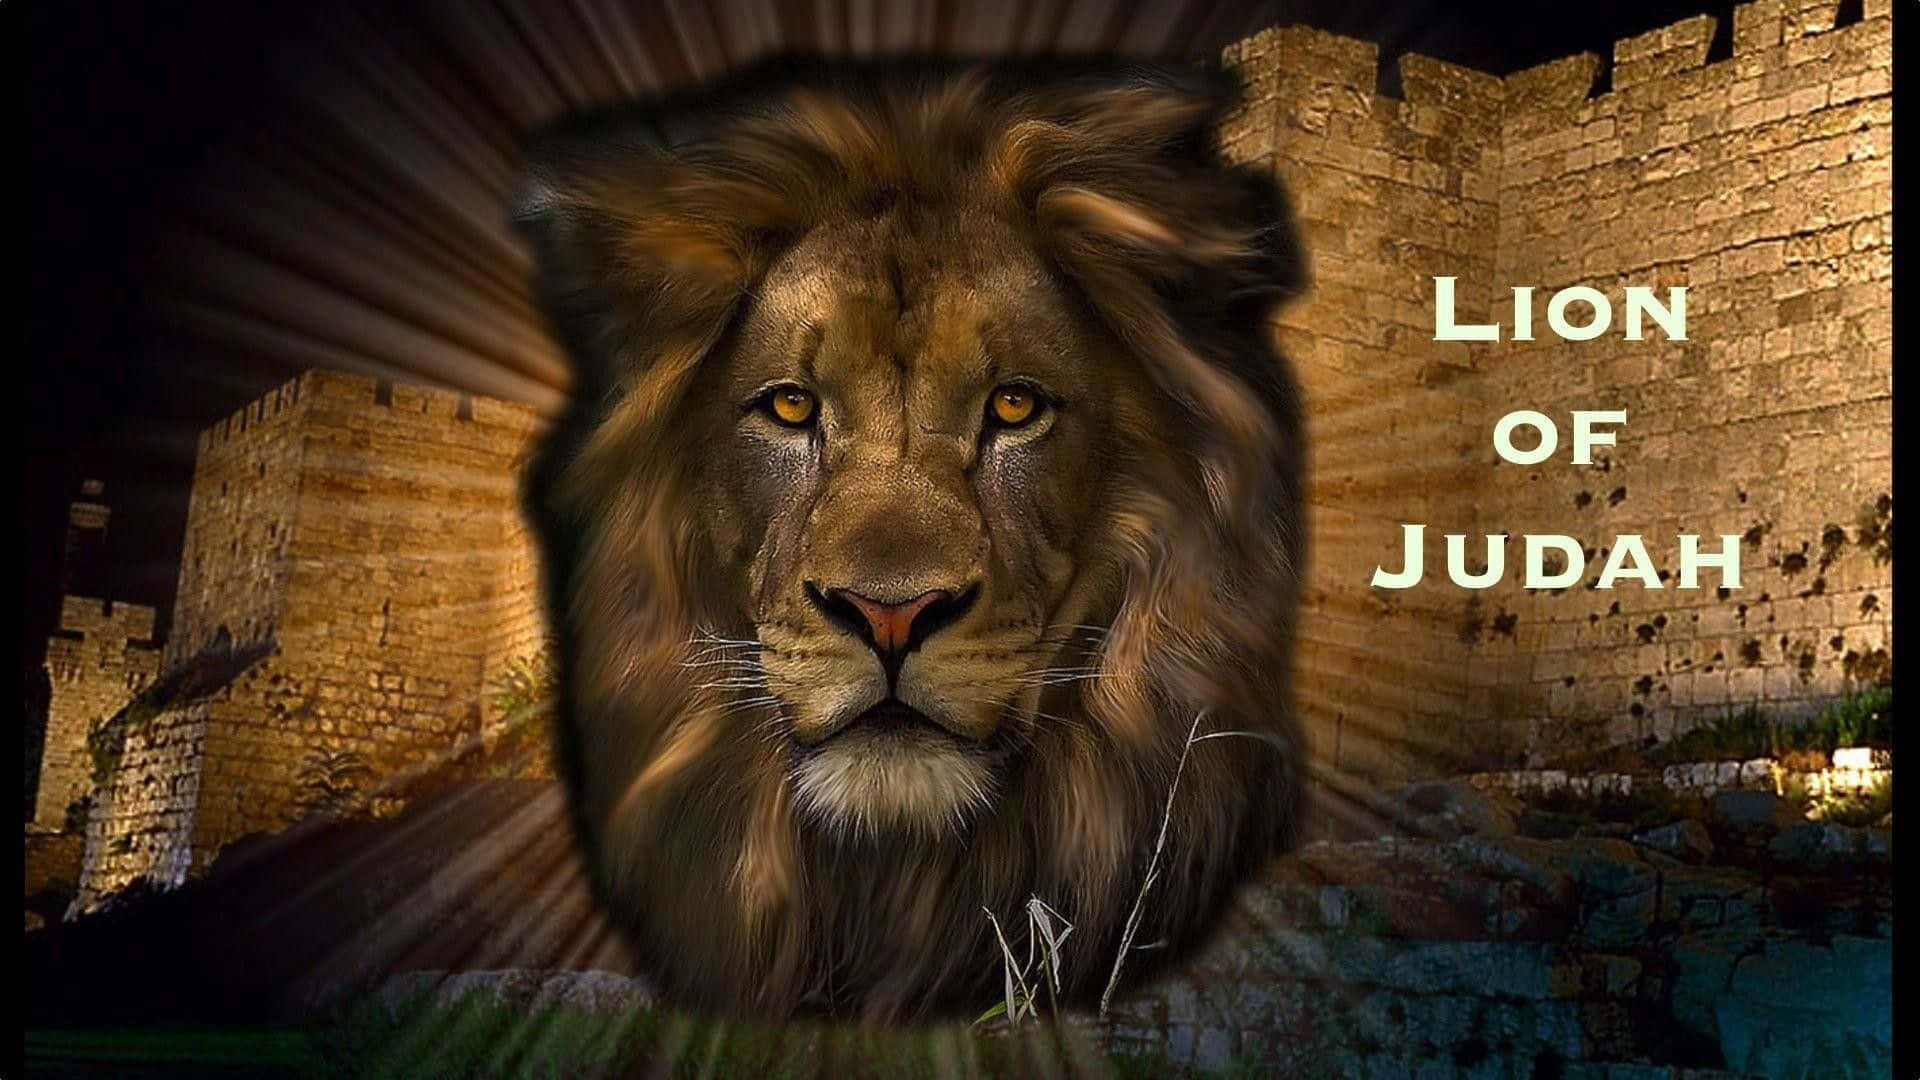 Download Lion Of Judah 1920 X 1080 Wallpaper Wallpaper | Wallpapers.com